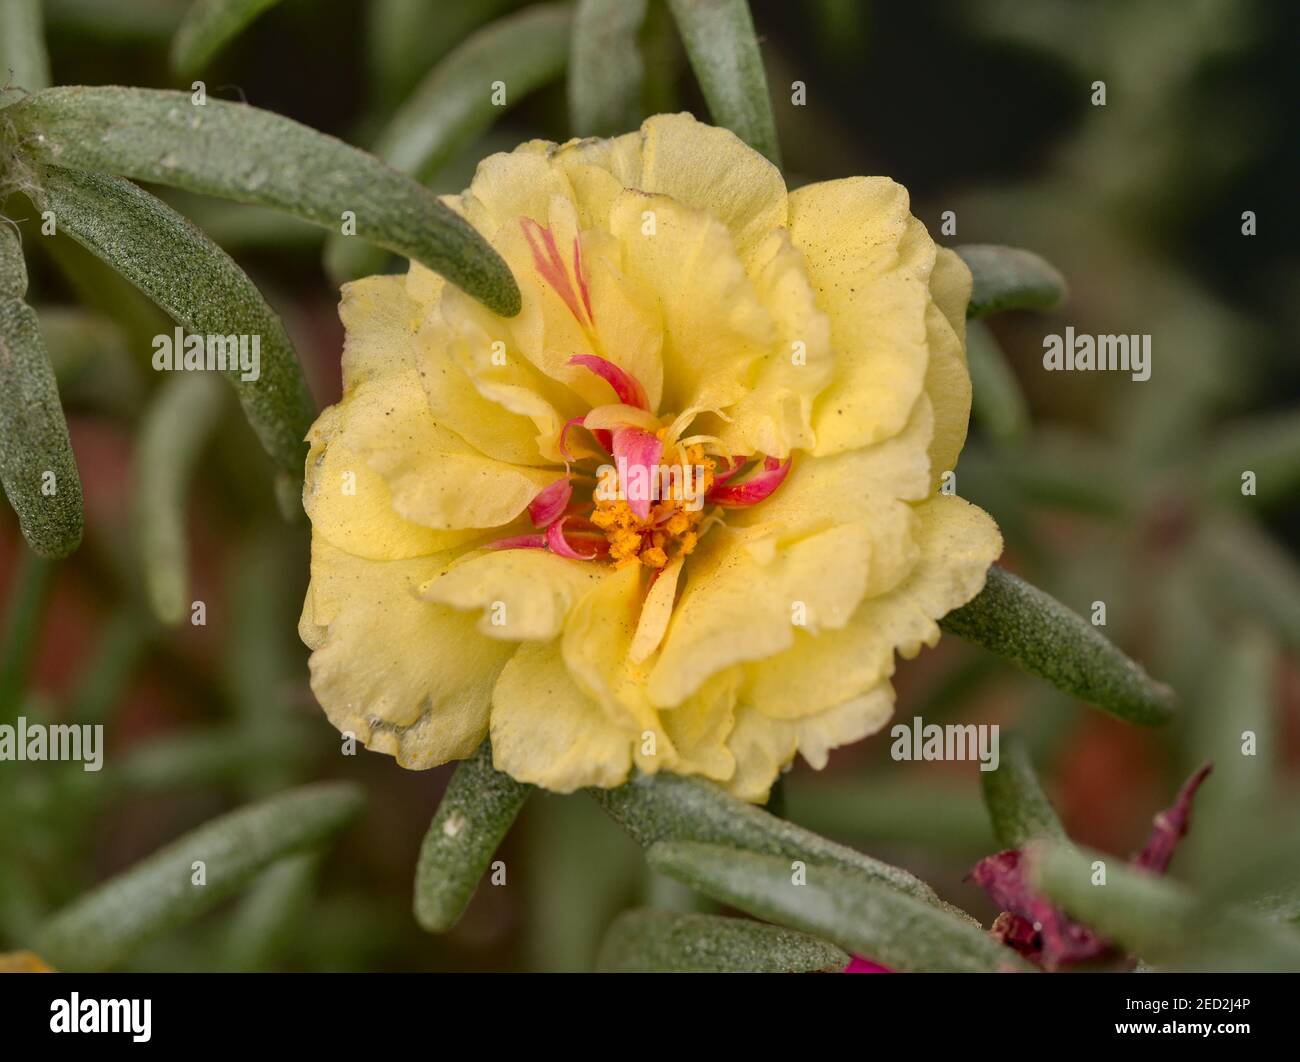 Close up view of a yellow portulaca flower (Portulaca grandiflora) Stock Photo